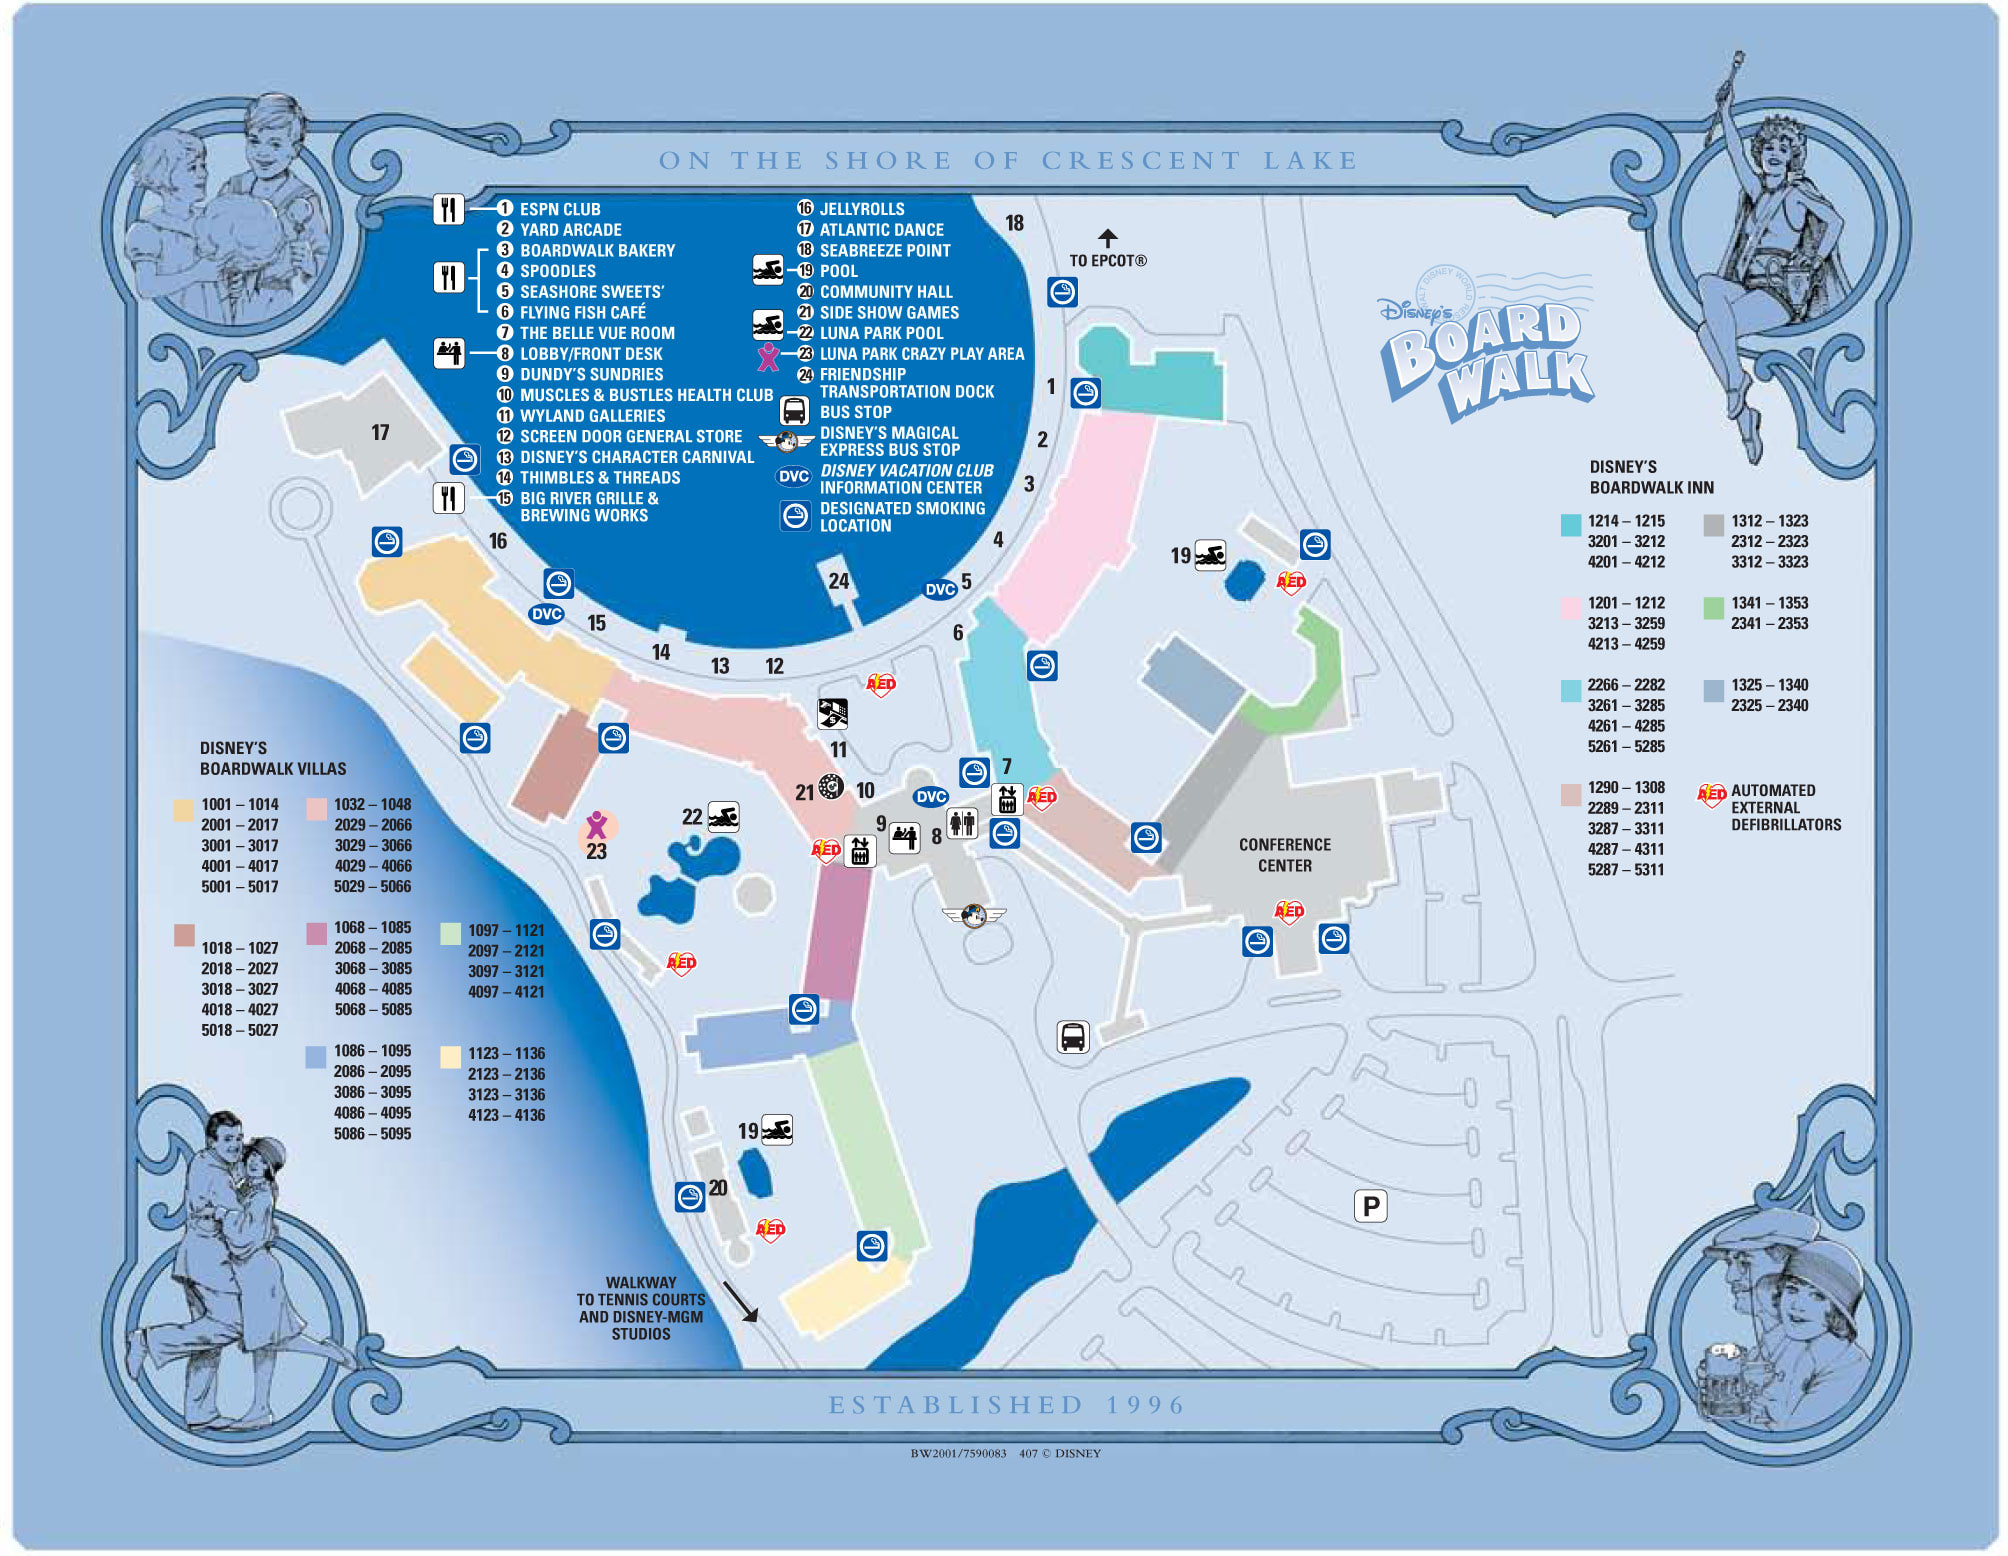 Walt Disney World maps for theme parks, resorts